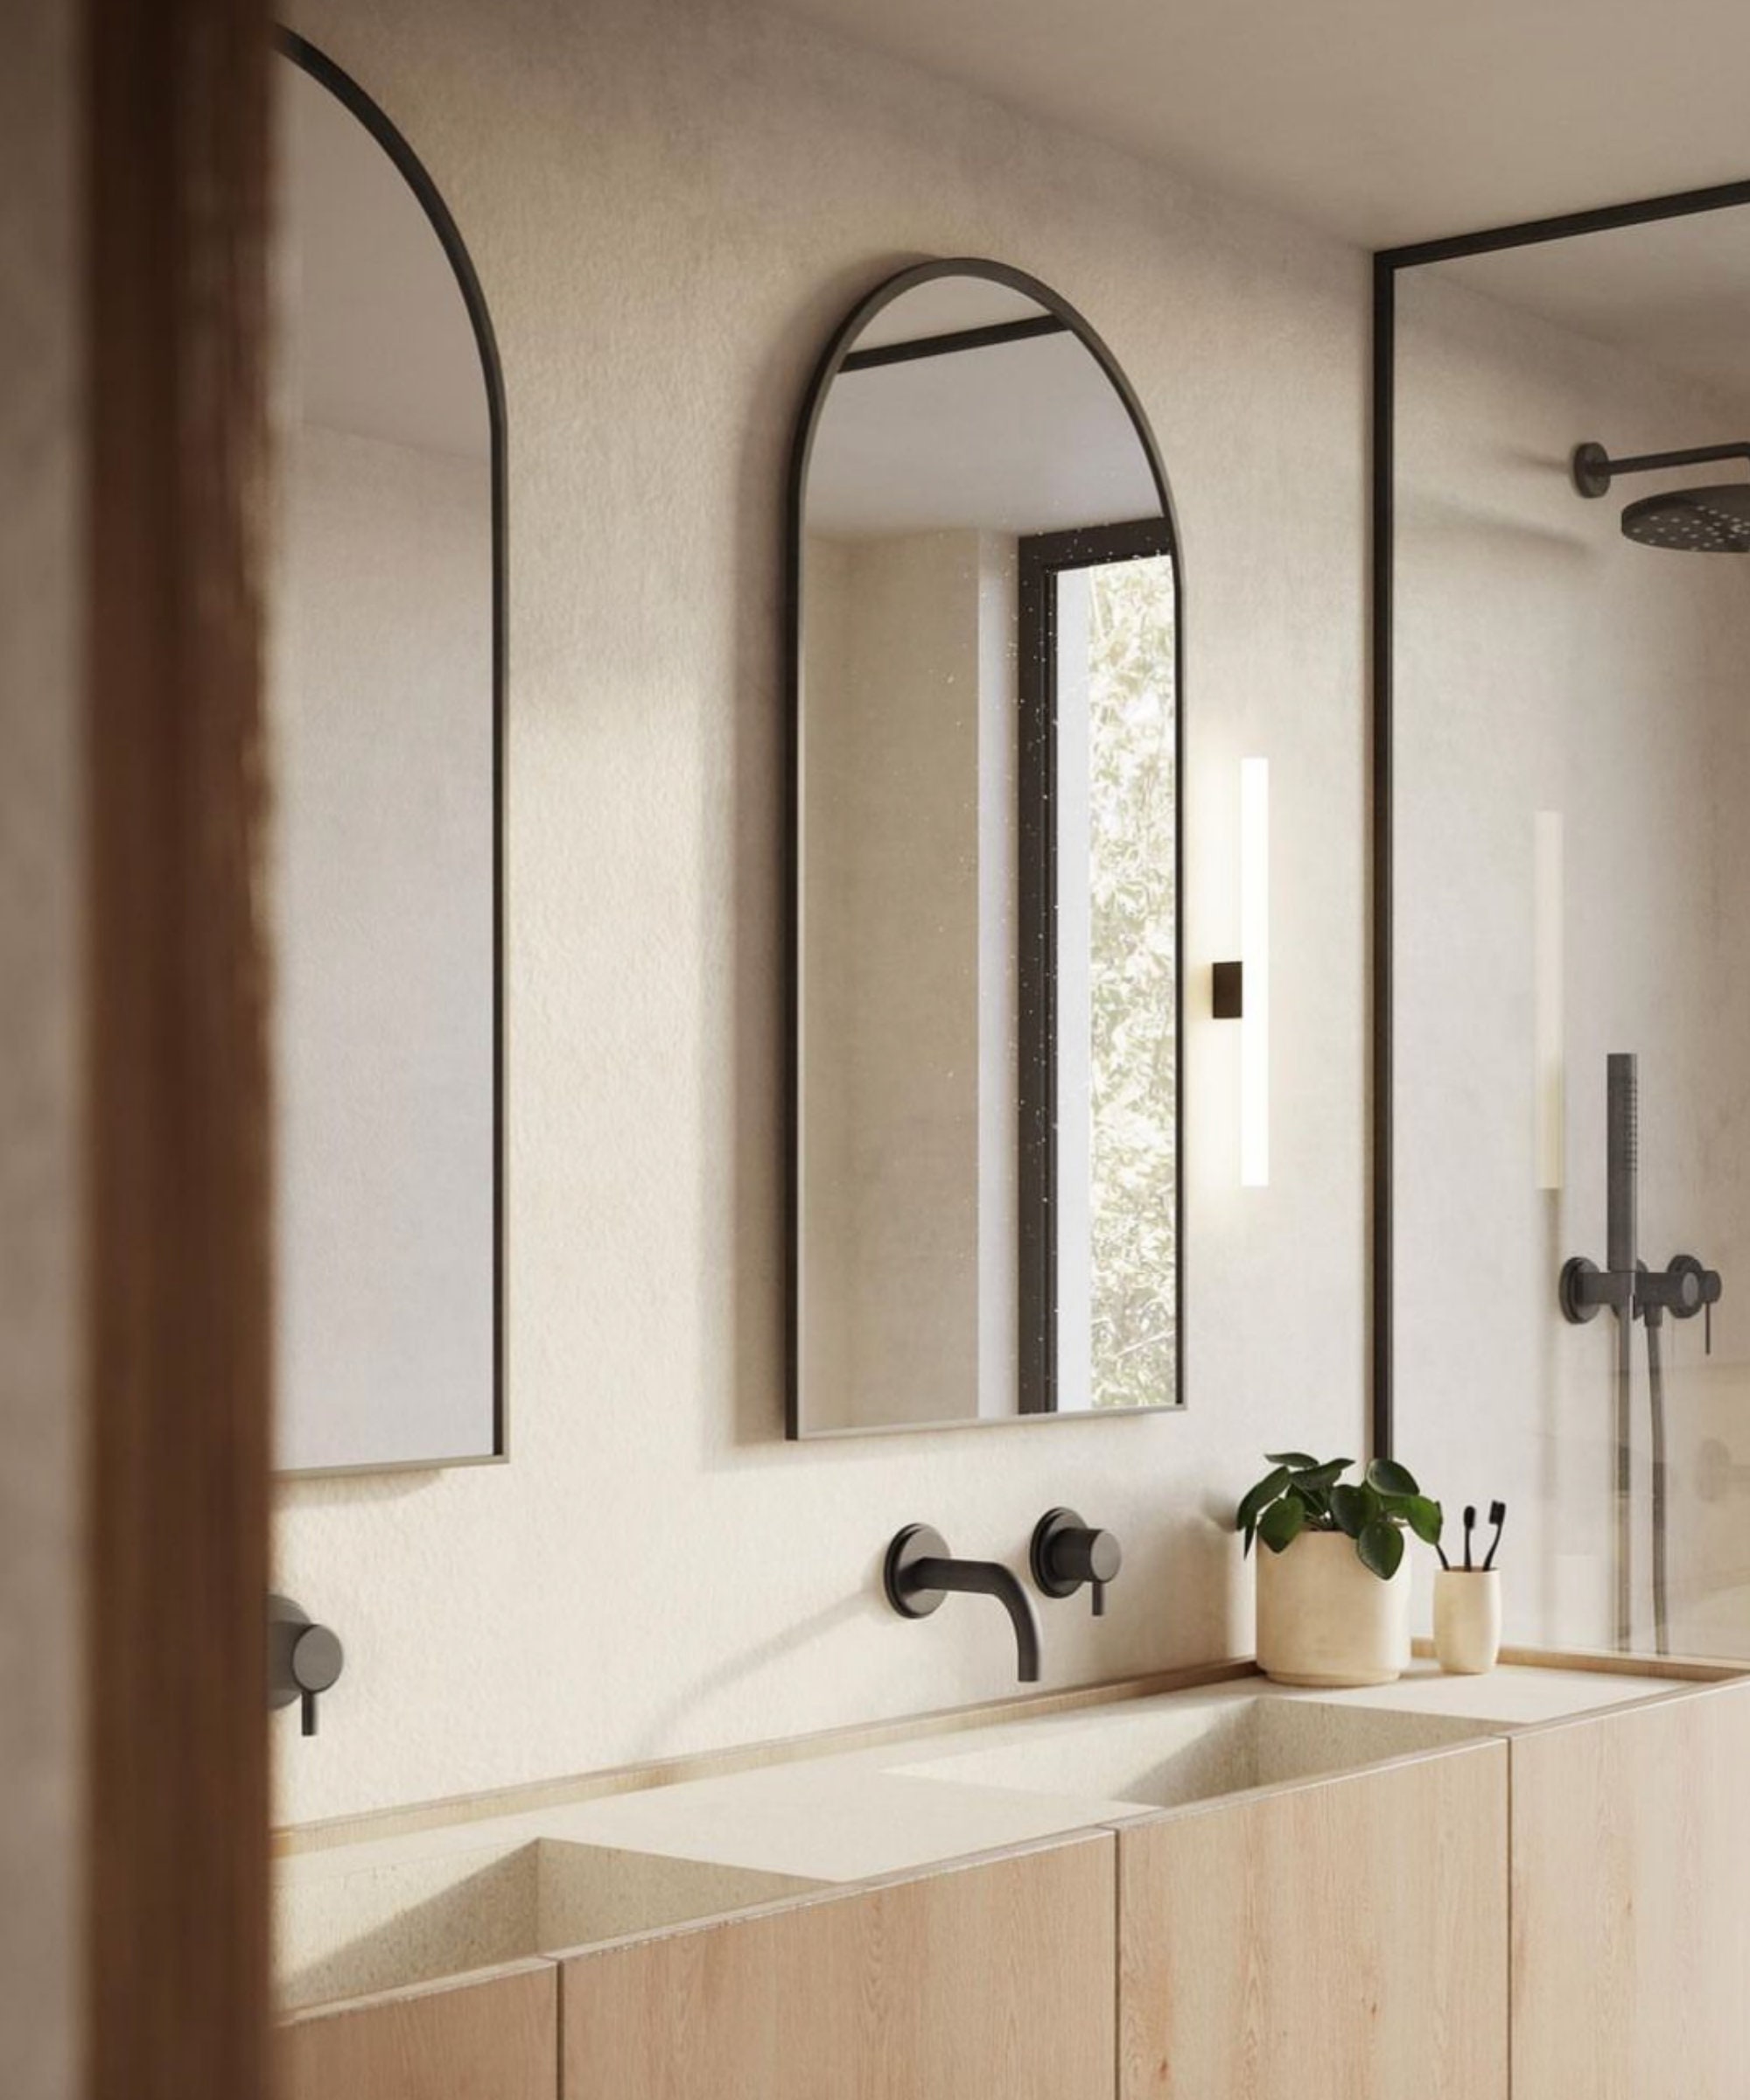 Irregular Bean Wall Mirror Home Decor Asymmetrical Unique Mirror Bathroom  Mirror